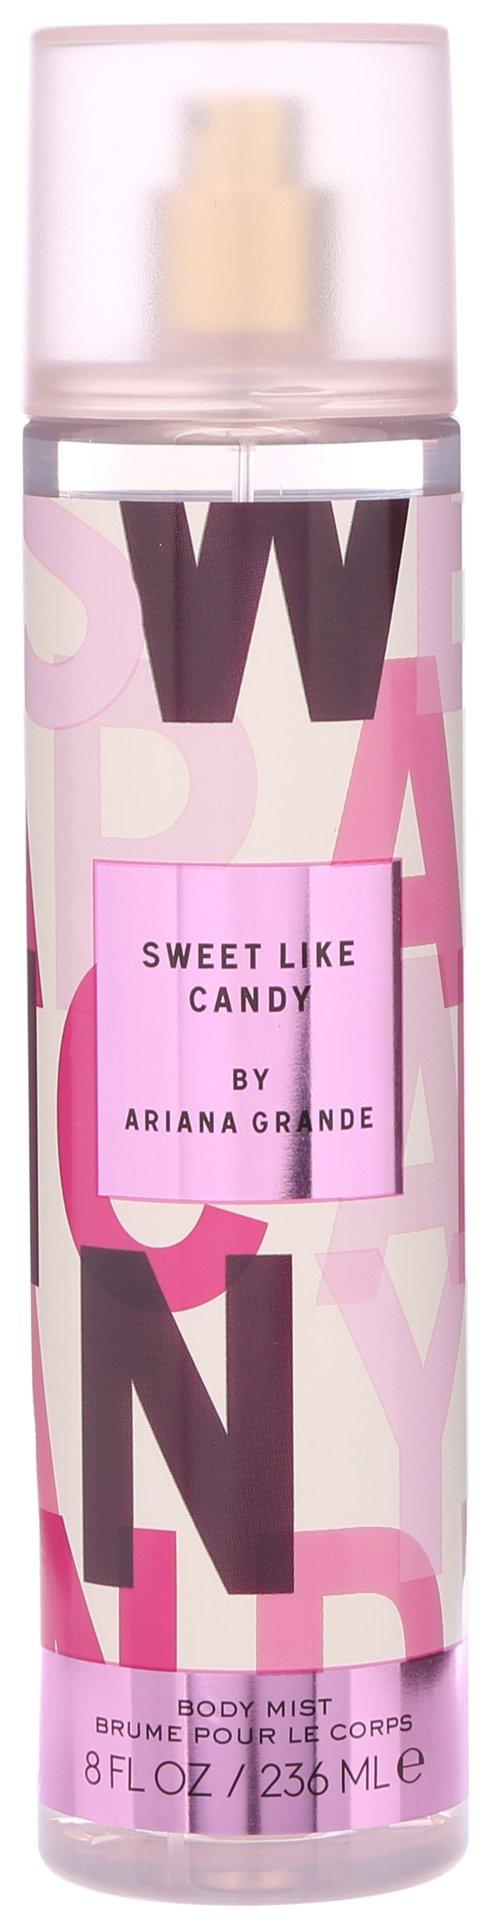 Ariana Grande Sweet Like Candy 8 Fl.Oz. Body Mist